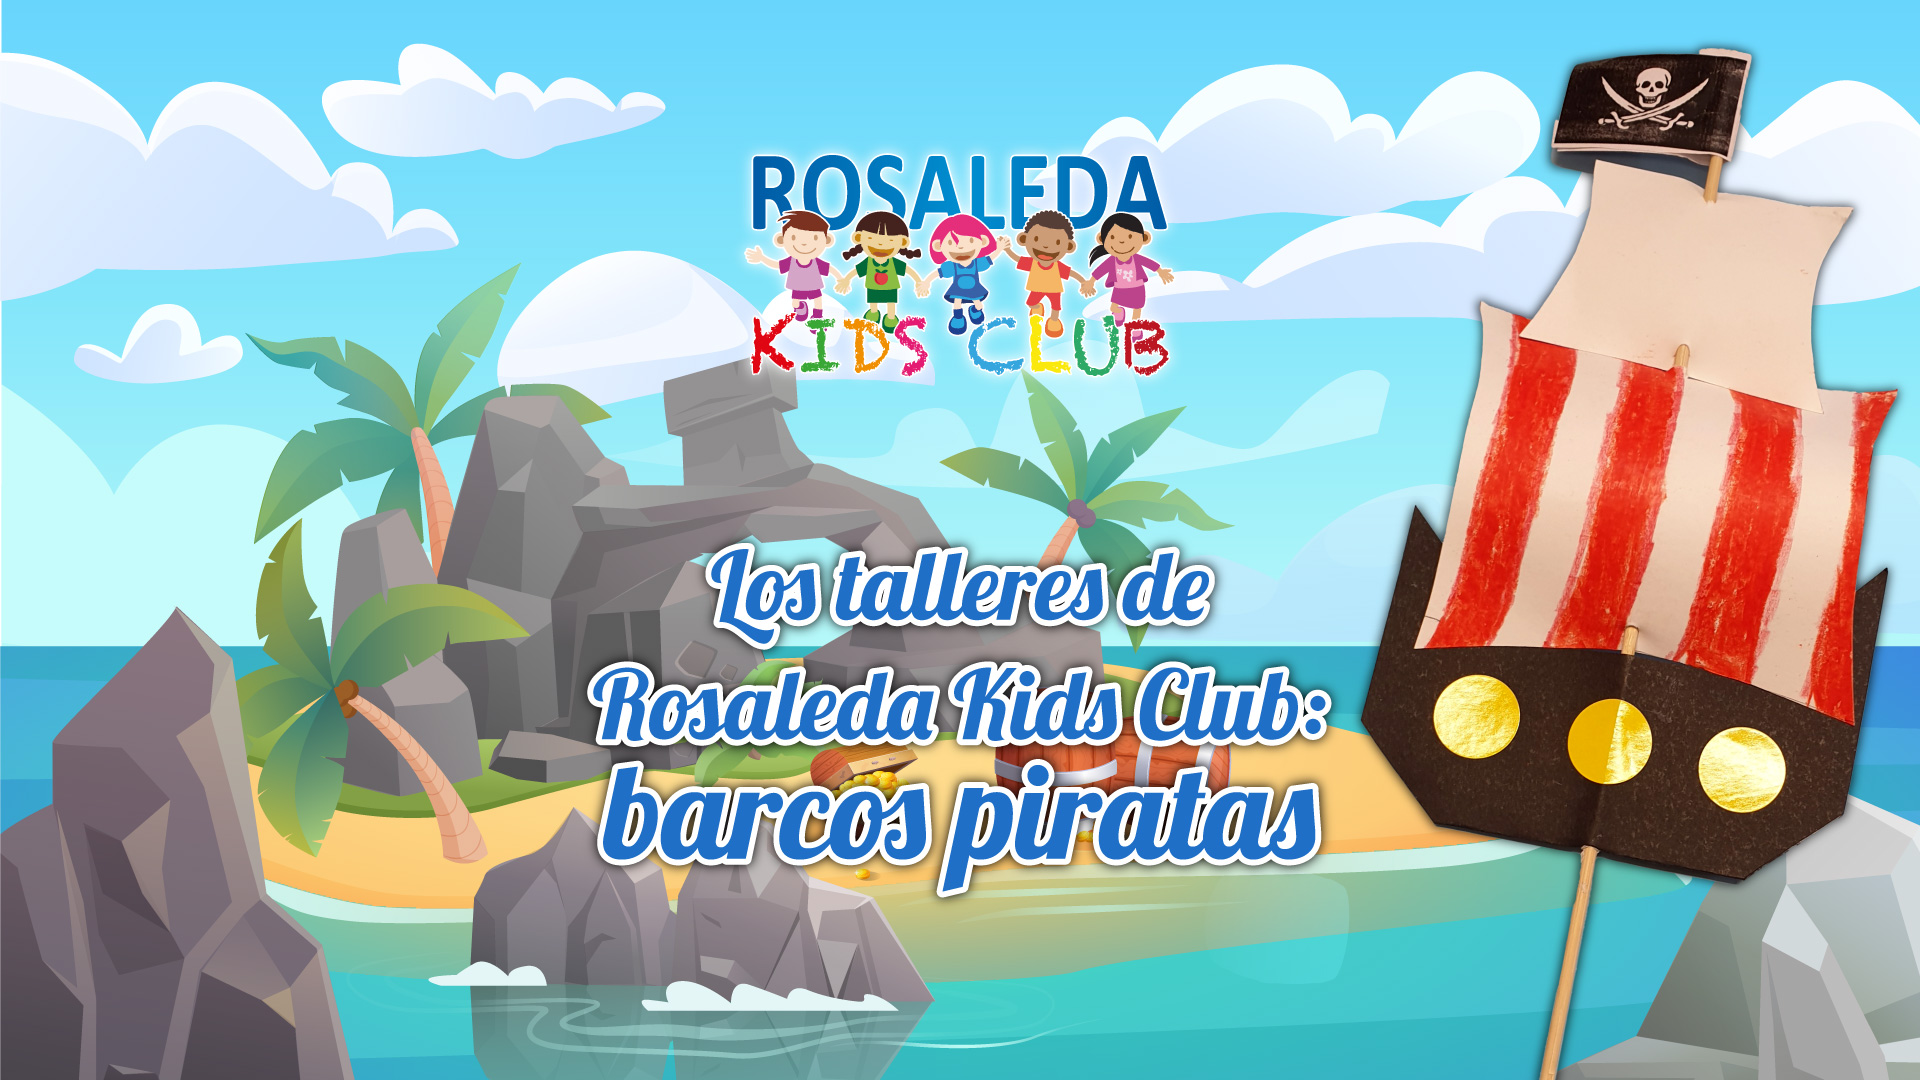 Los talleres de Rosaleda Kids Club: barco pirata